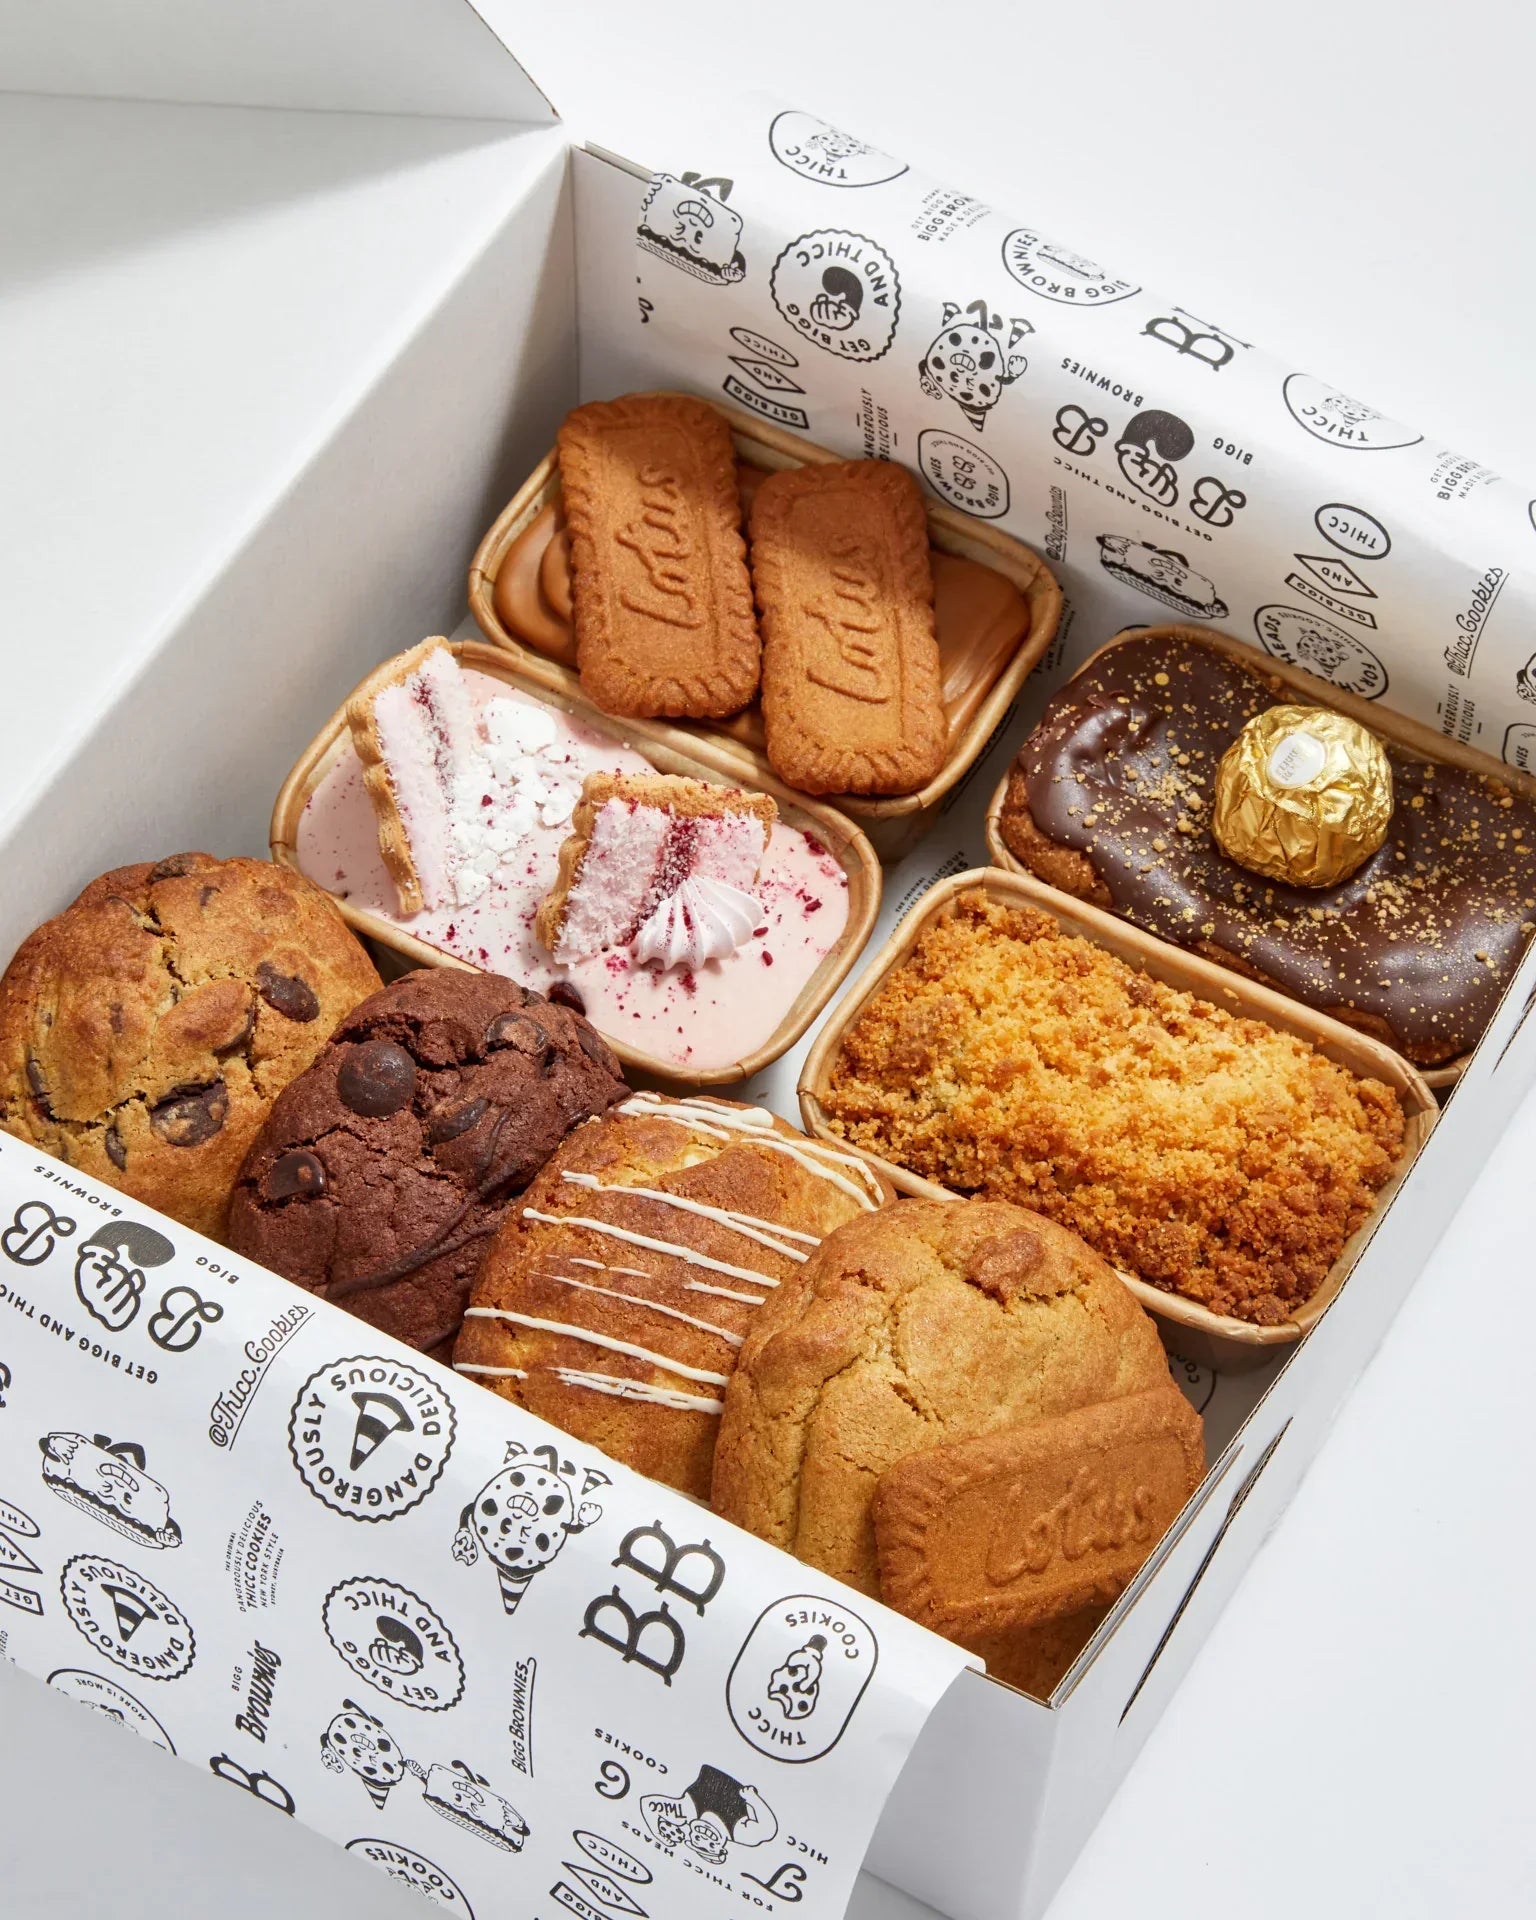 "Bite Me" Box- BIGG Brownies & THICC Cookies - New York Style Cookies